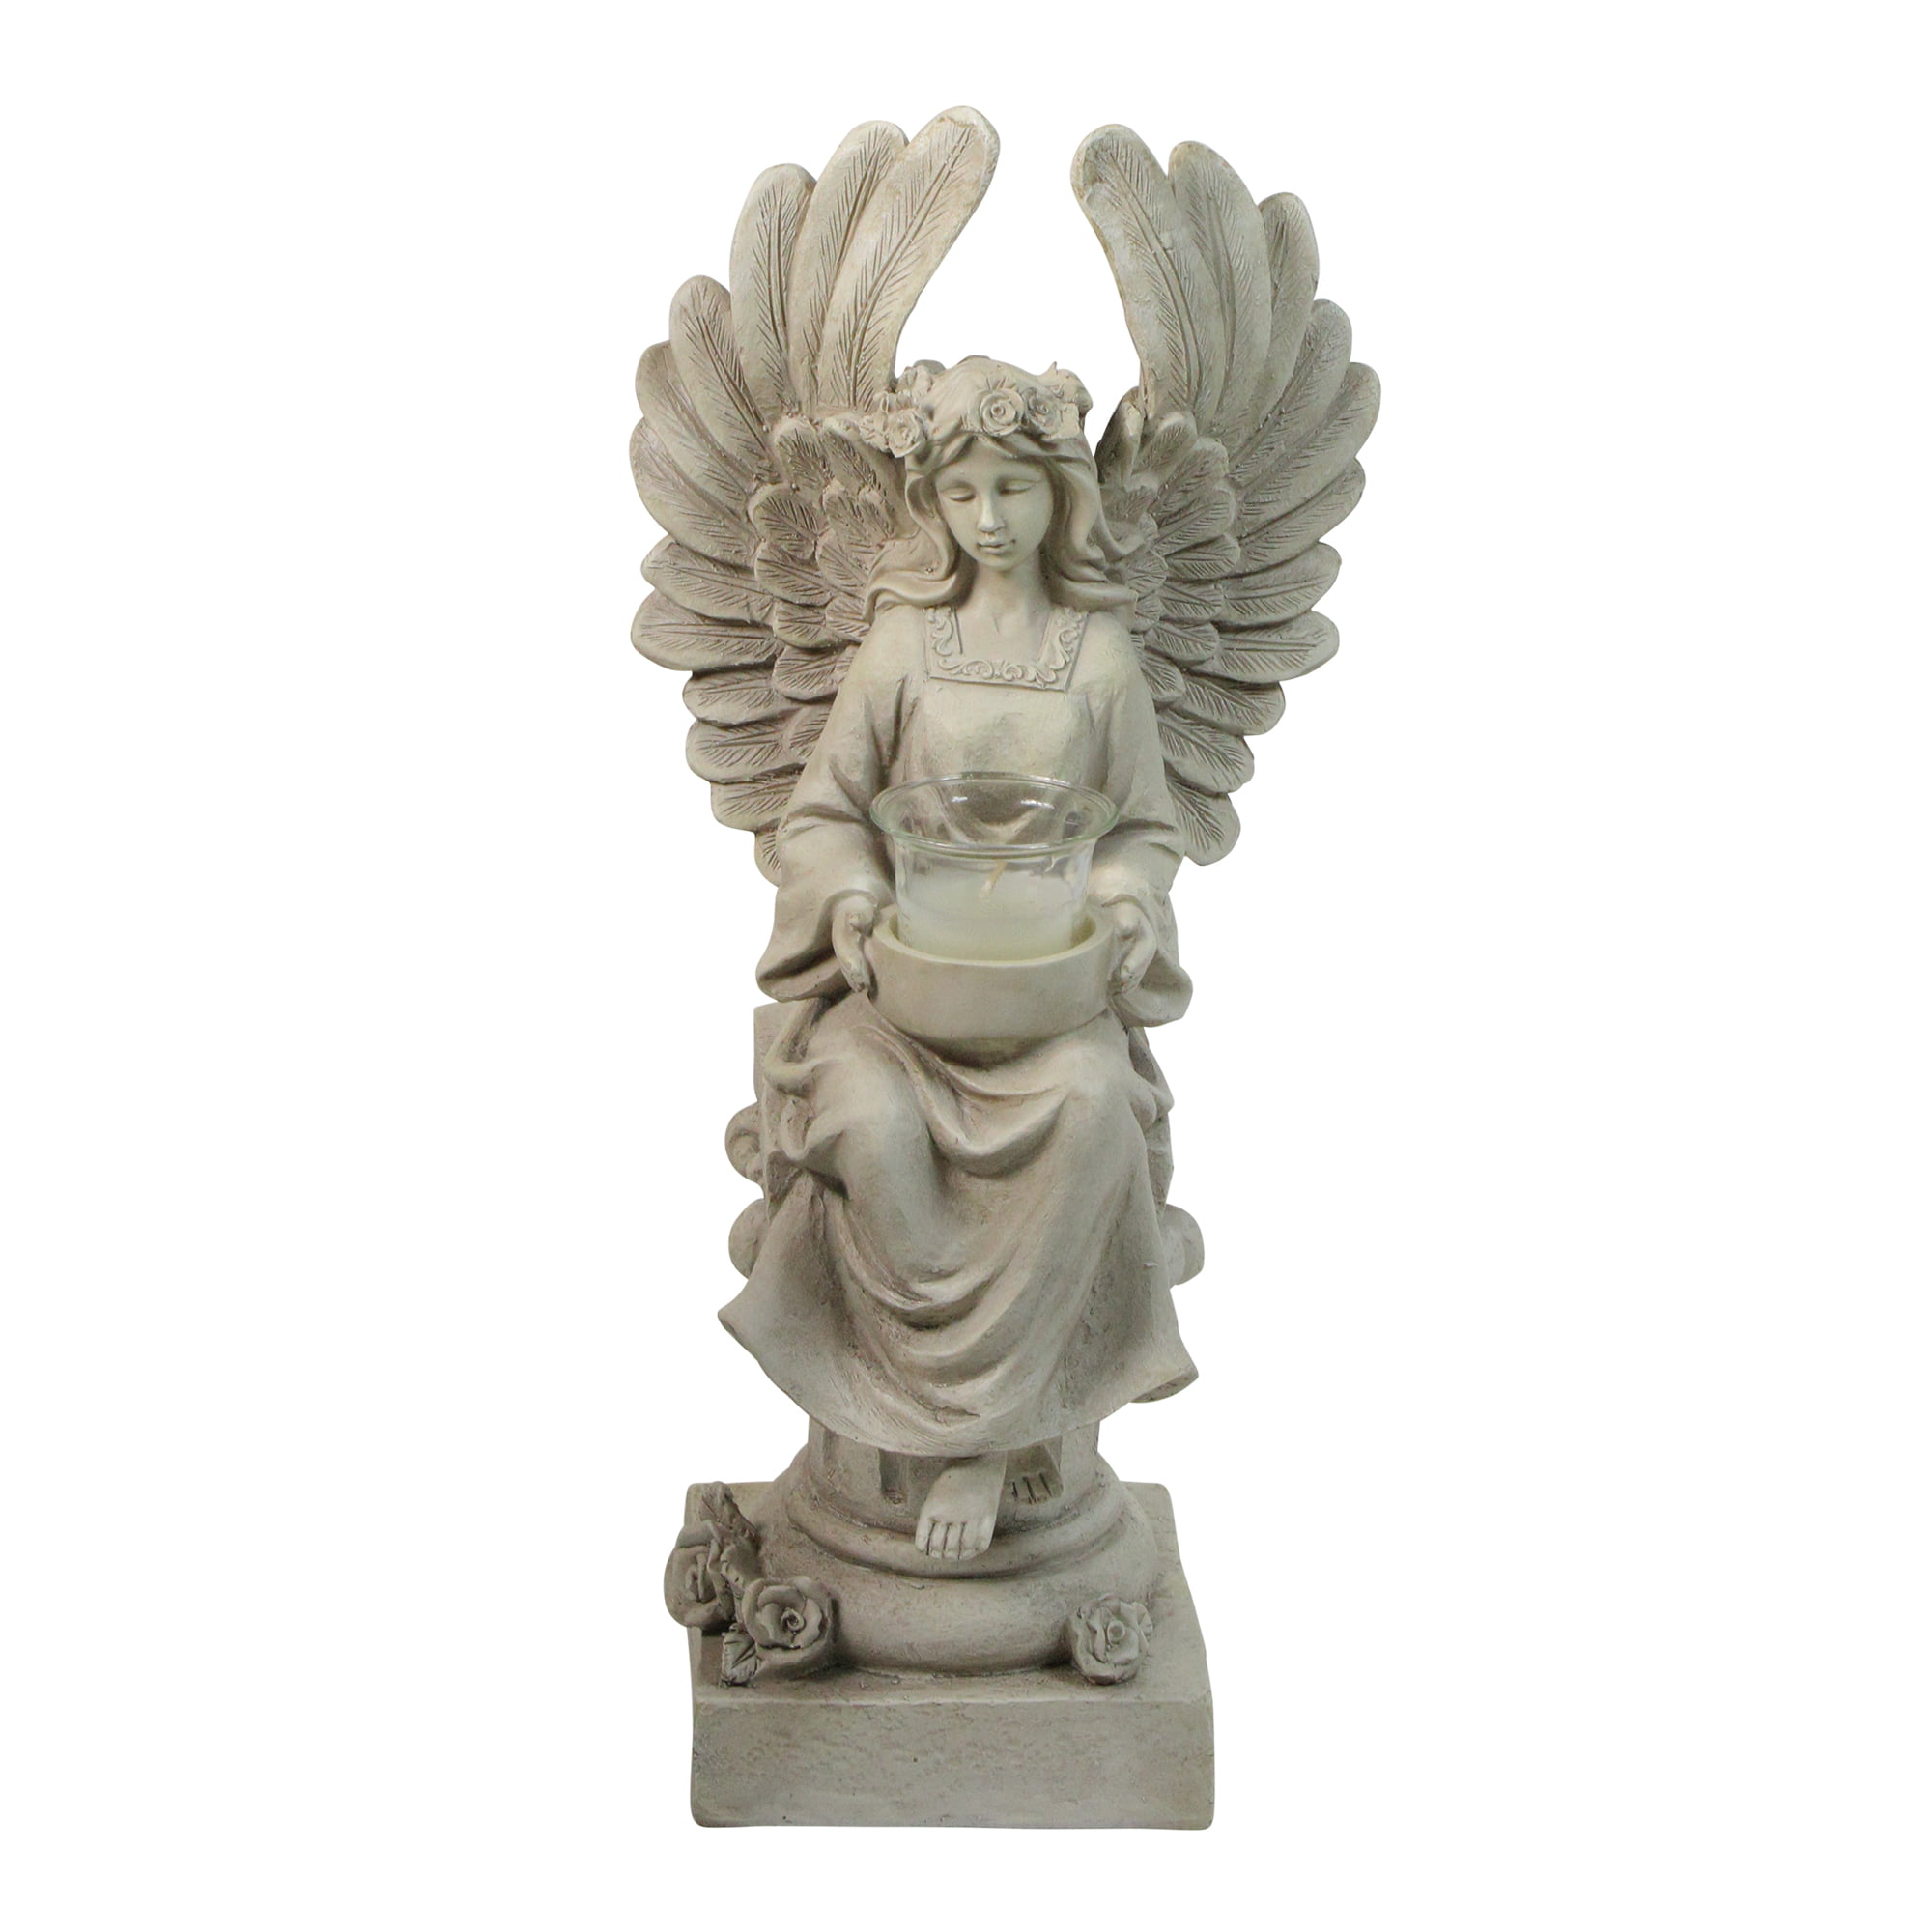 Angel cherub bird wings tealight candle holder memorial wedding statue decor